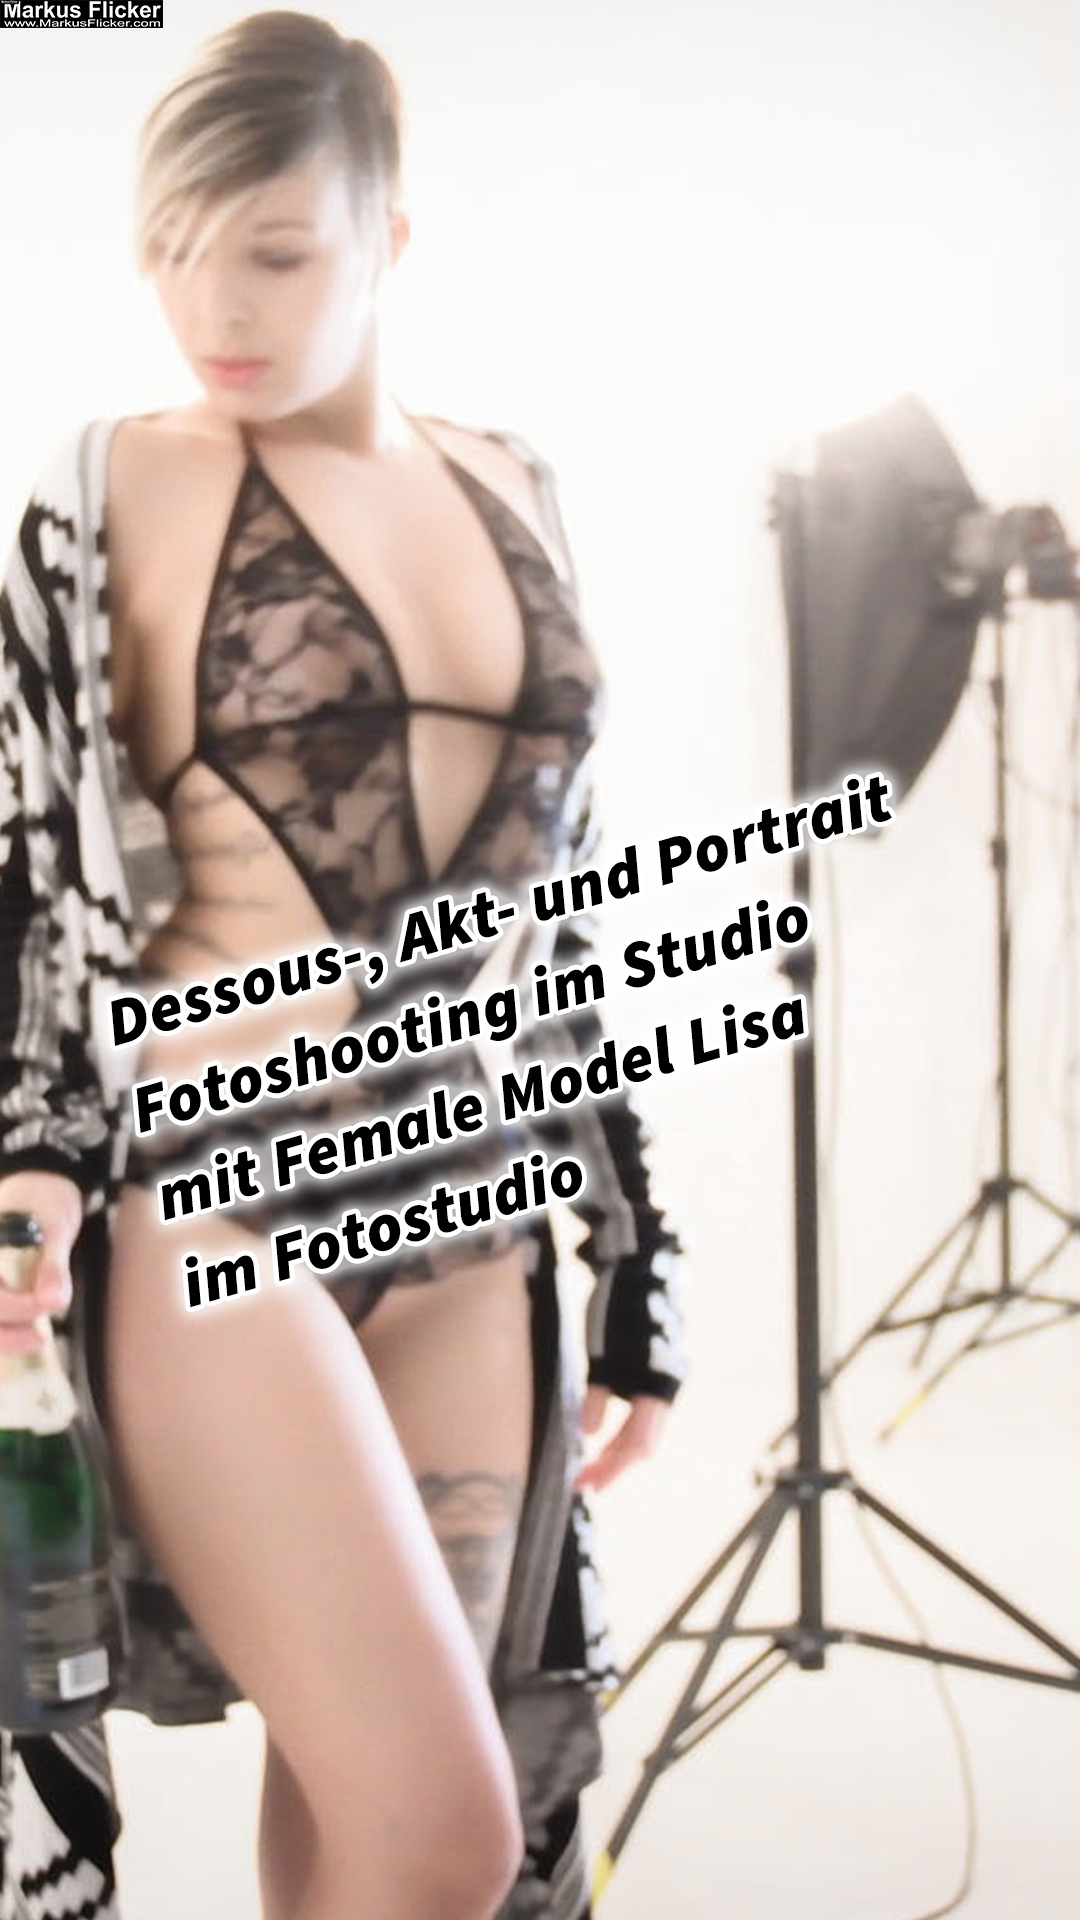 Dessous-, Akt- und Portrait-Fotoshooting im Studio mit Female Model Lisa im Fotostudio Cinemagraph